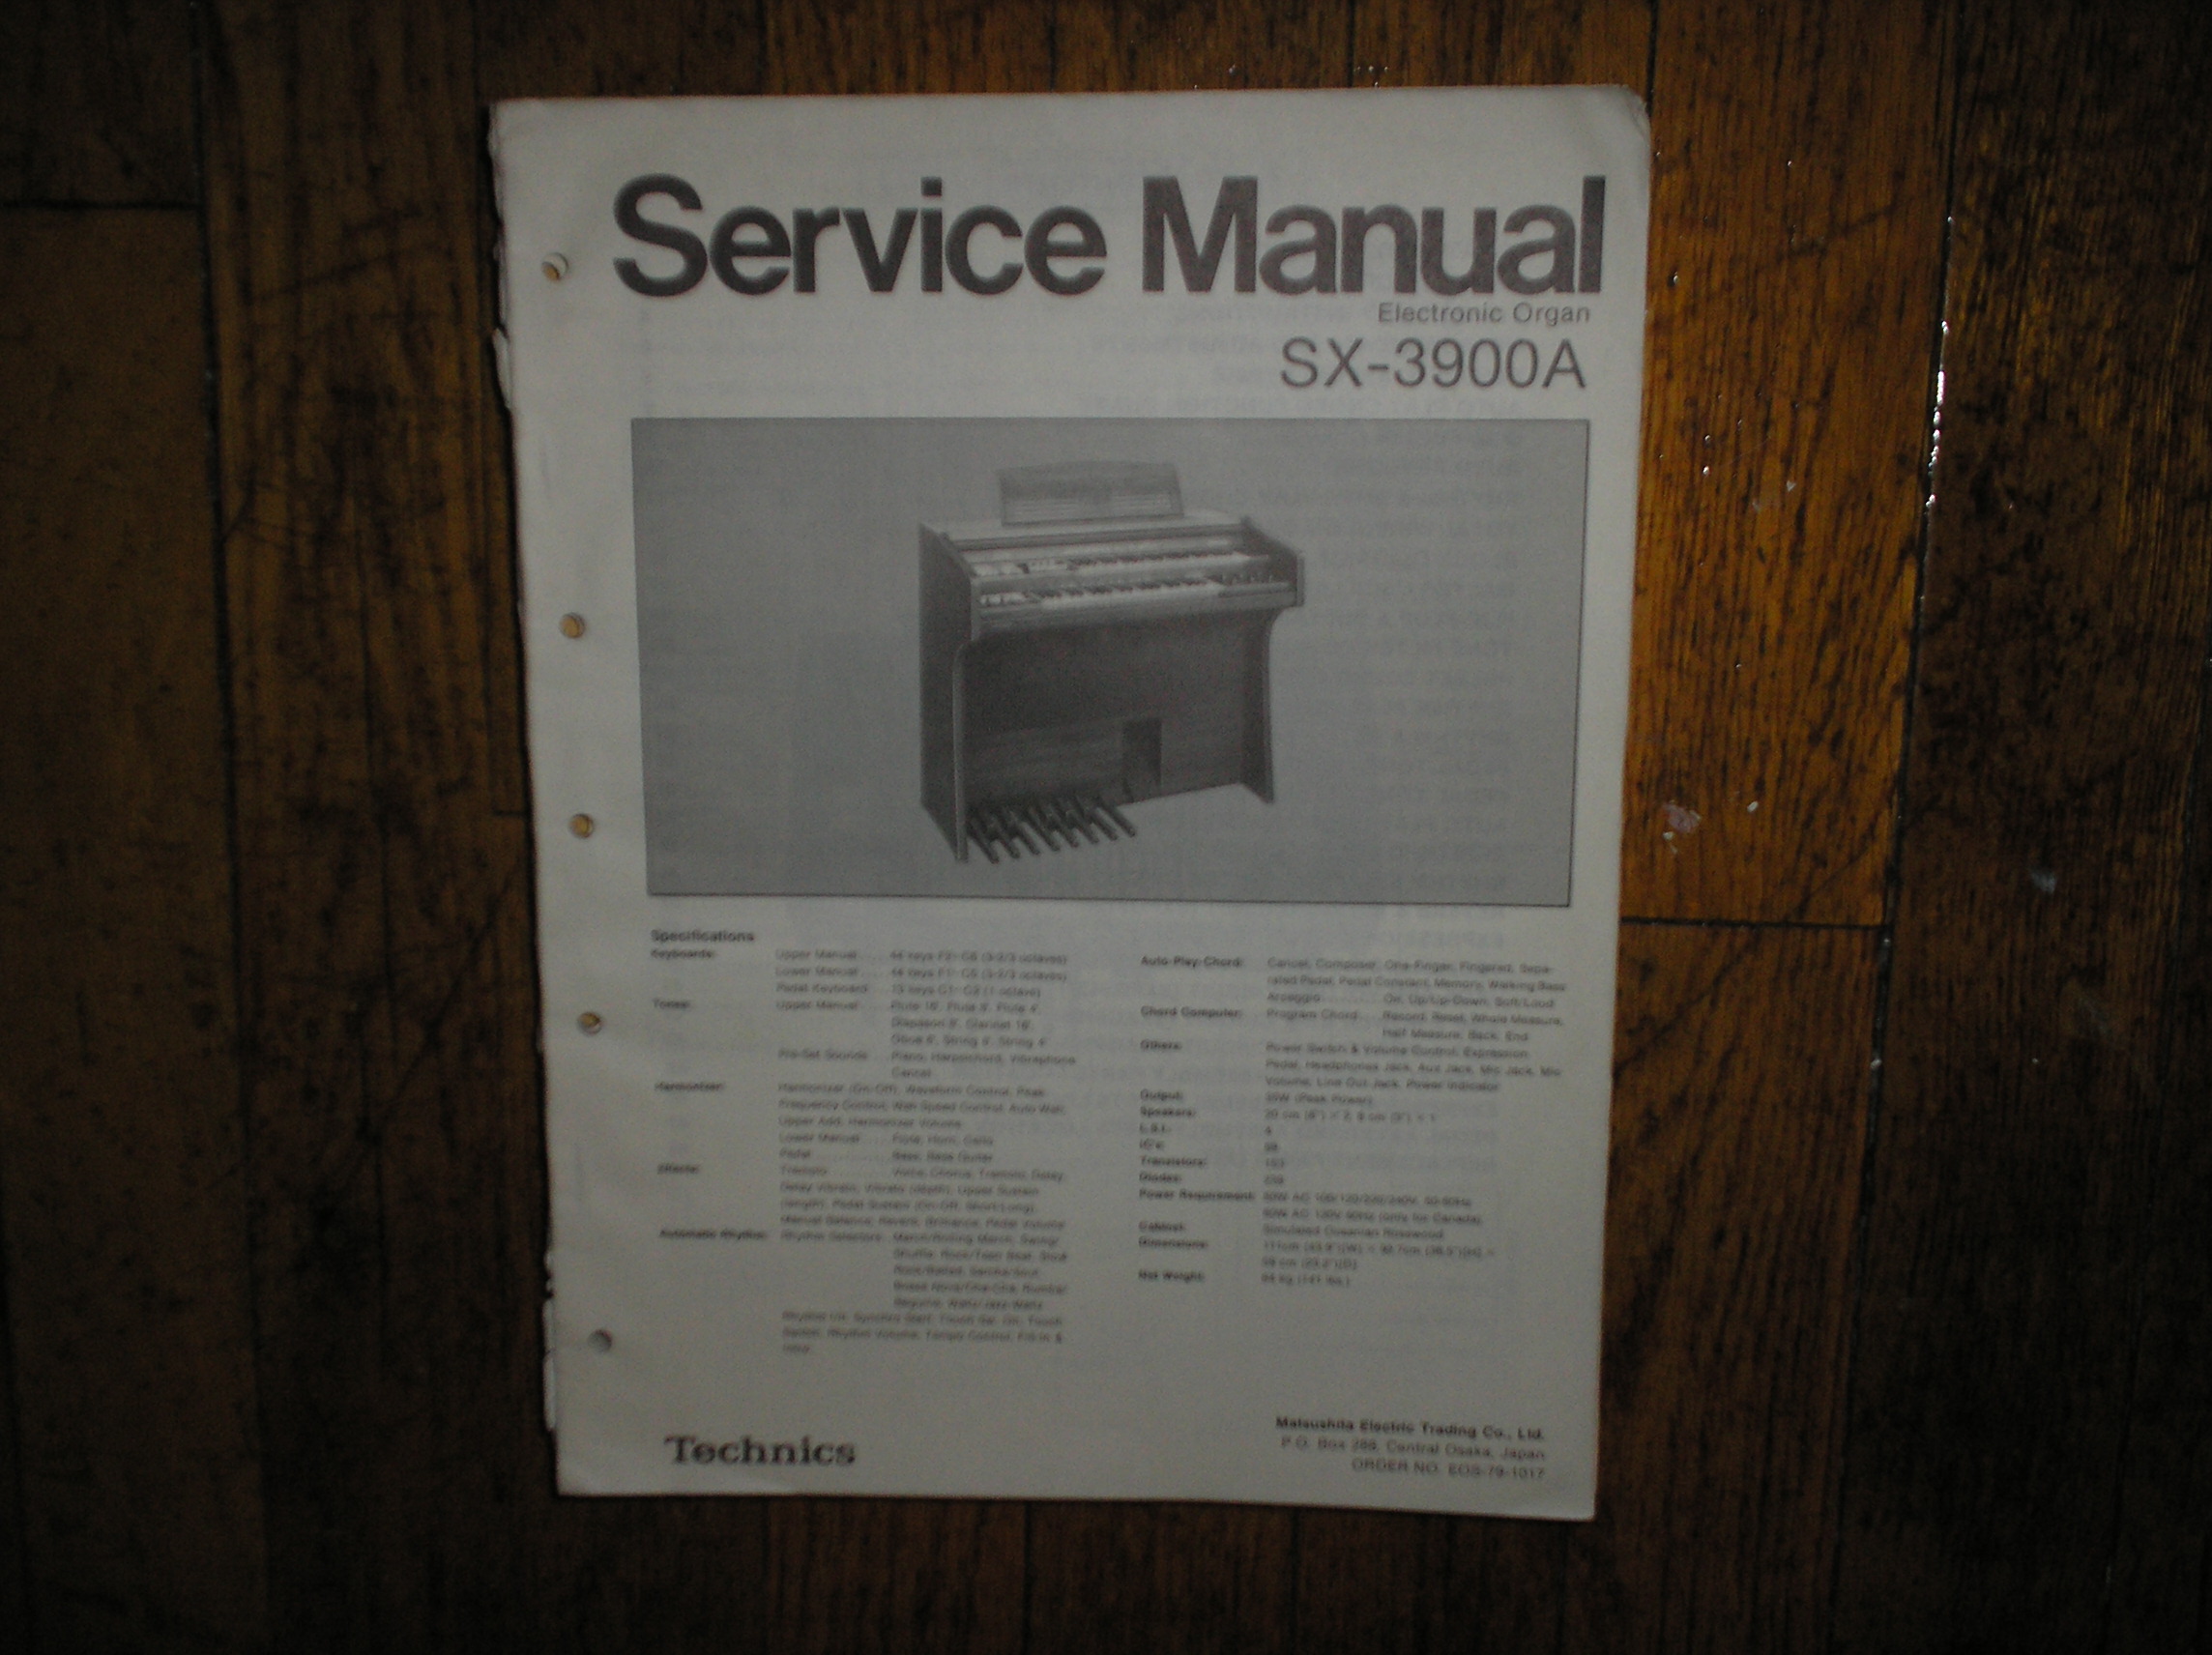 SX-3900A Electronic Organ Service Manual